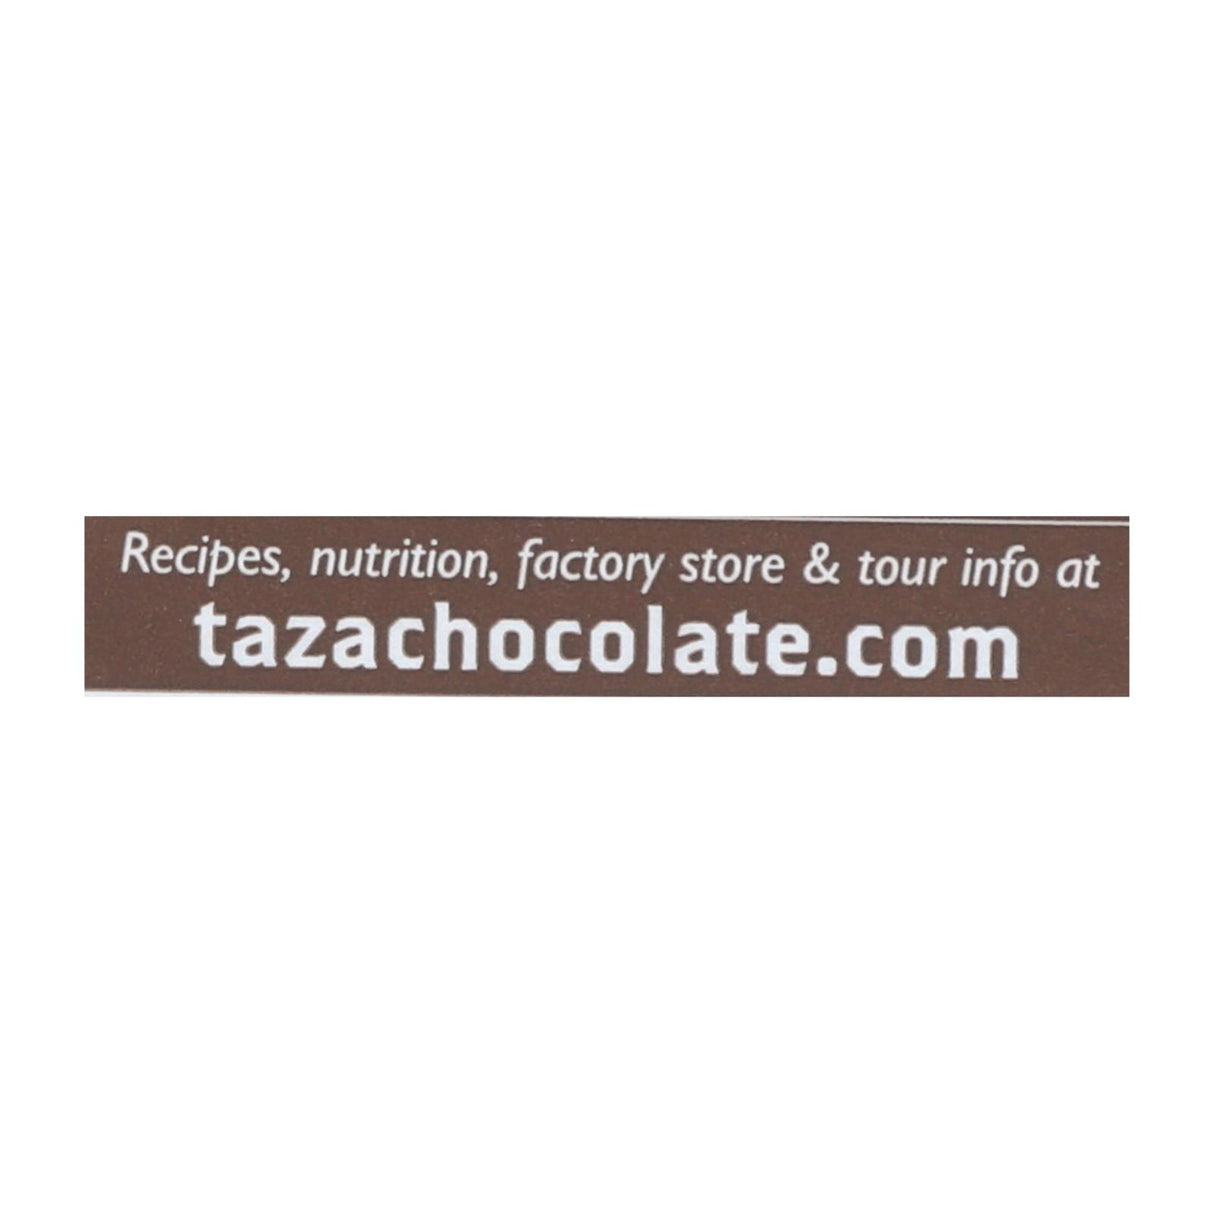 Taza Chocolate Organic Mexicano Super Dark Chocolate Discs, 2.7 Oz - Cozy Farm 